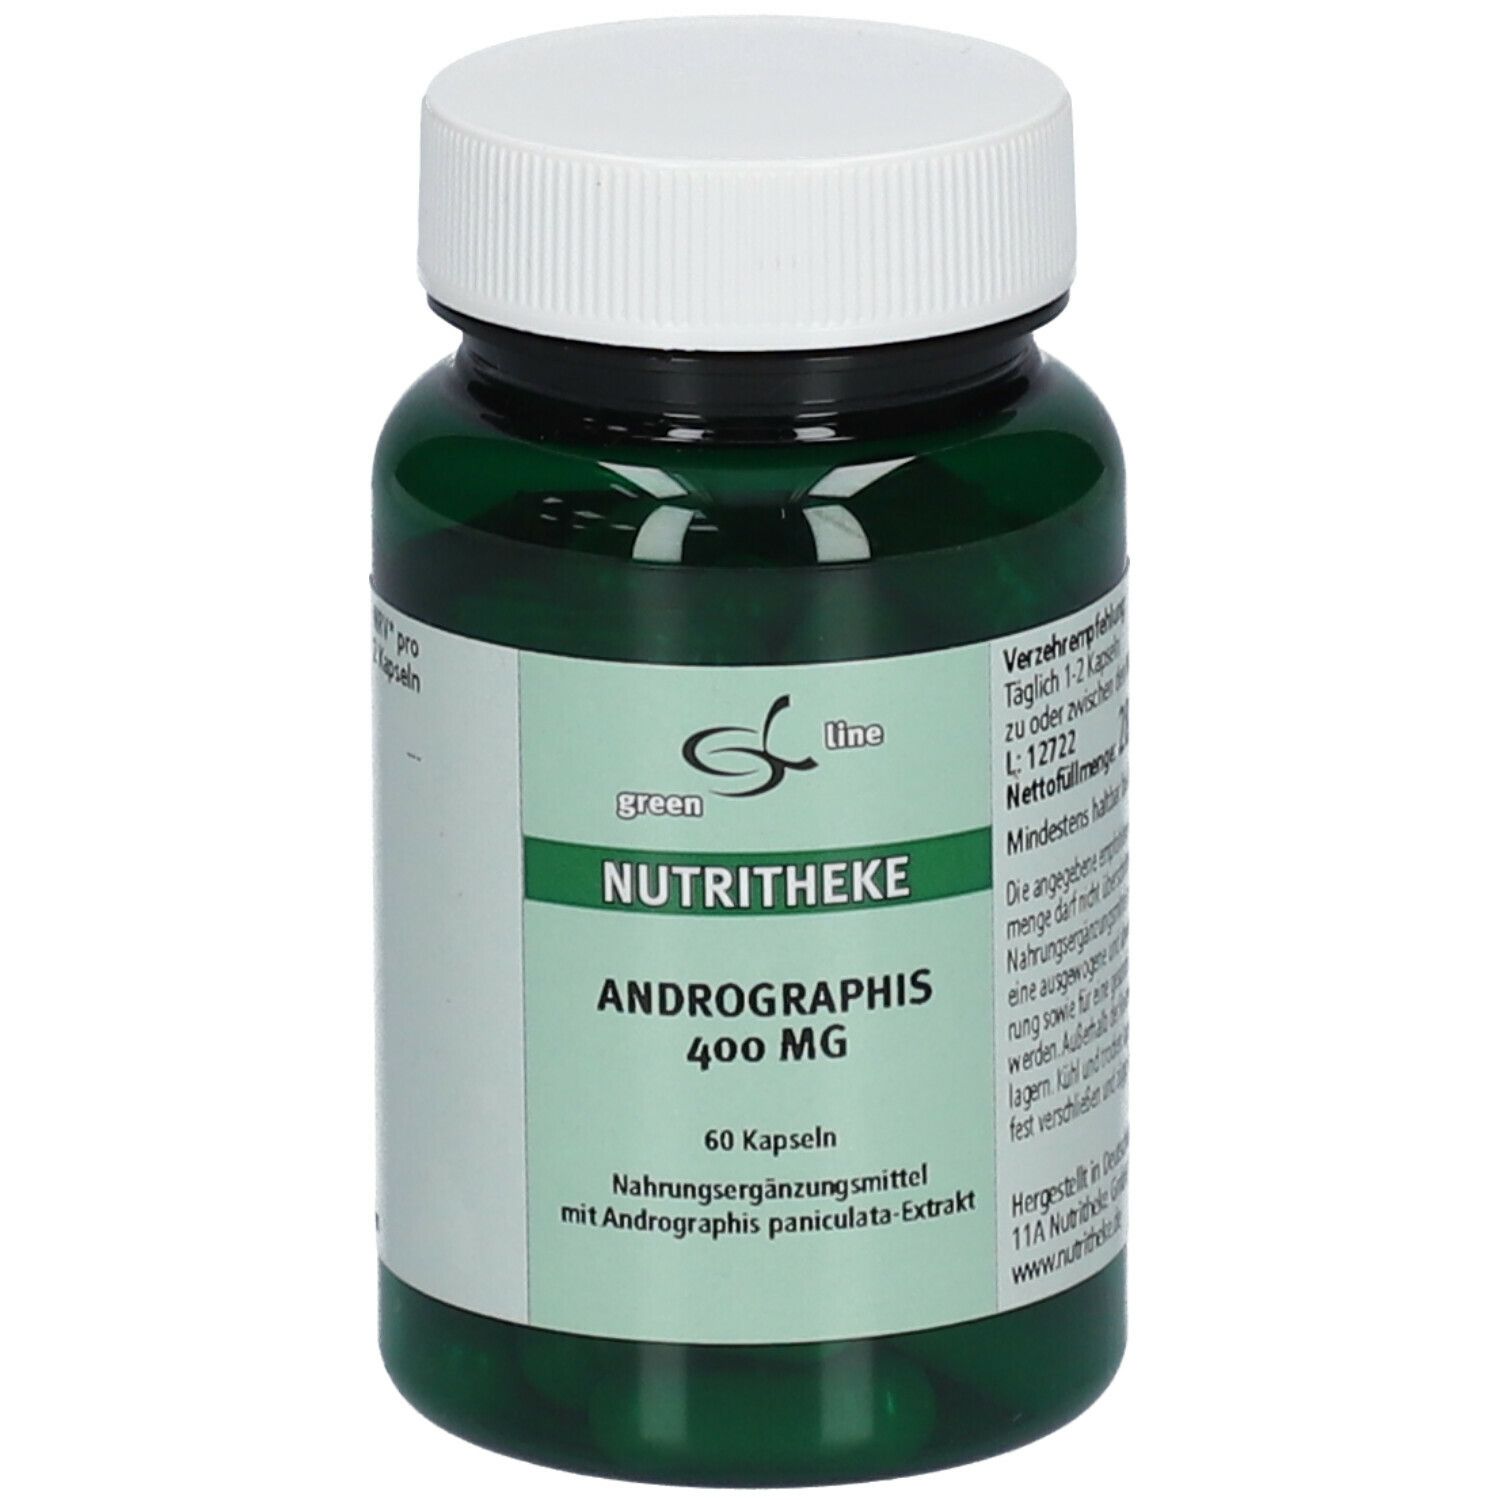 11 A Nutritheke GmbH green line Andrographis 400 mg